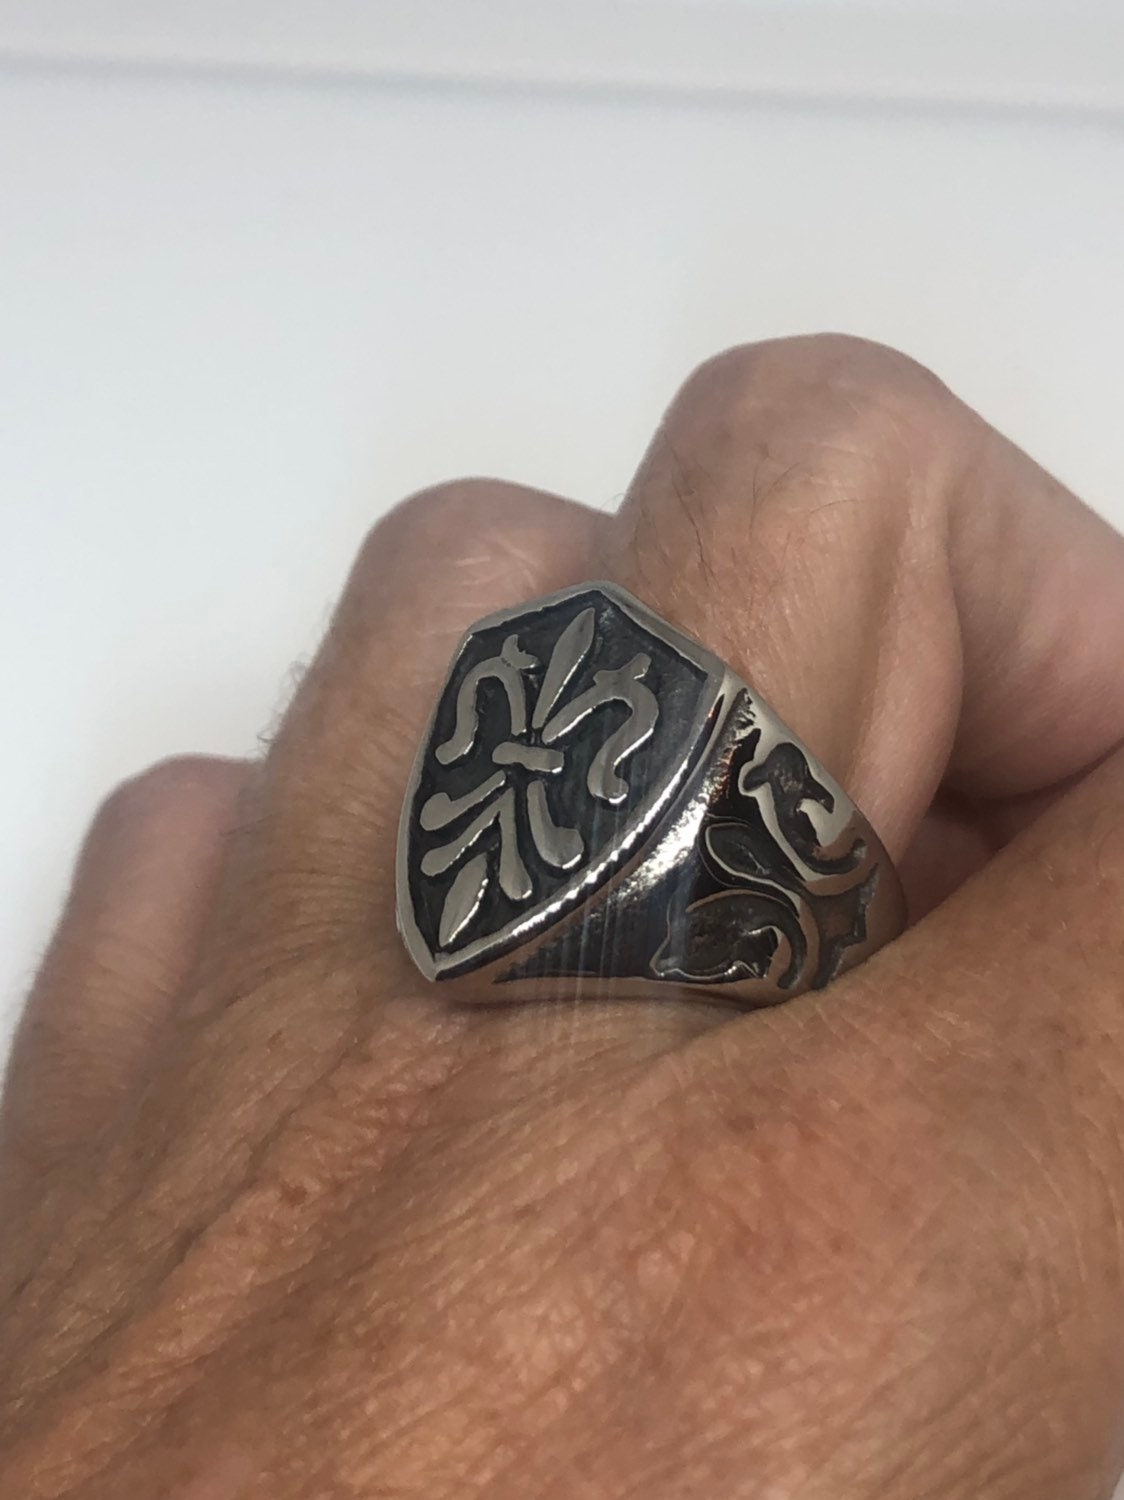 Vintage Gothic Silver Stainless Steel Fleur De Lis Mens Ring